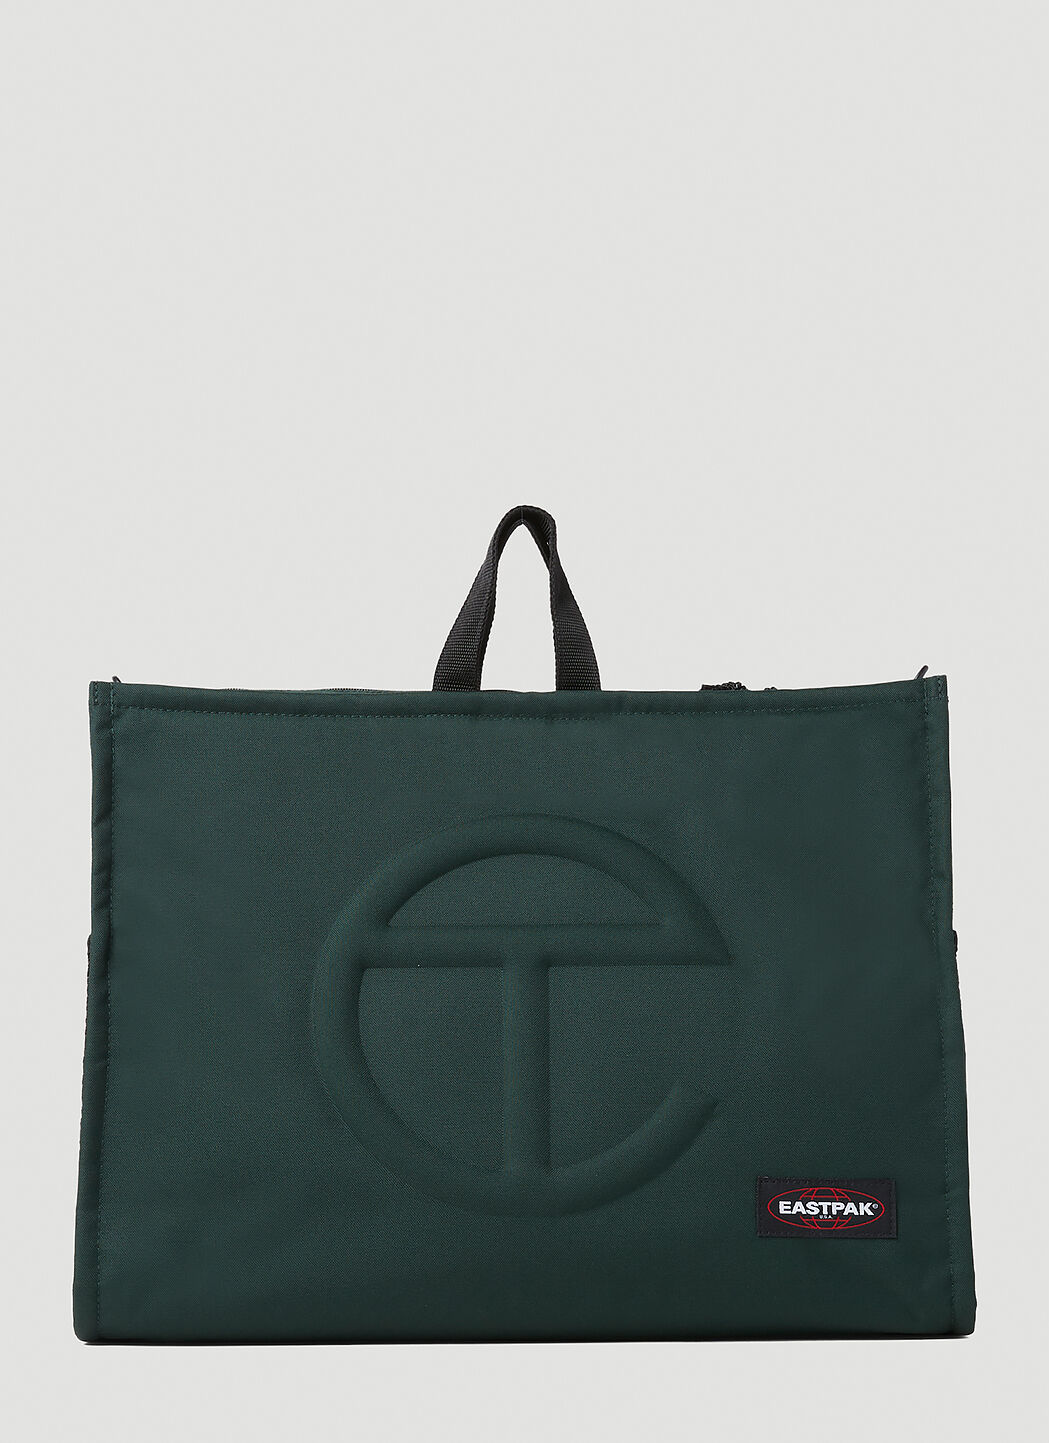 Eastpak x Telfar Shopper Large Tote Bag レッド est0353019